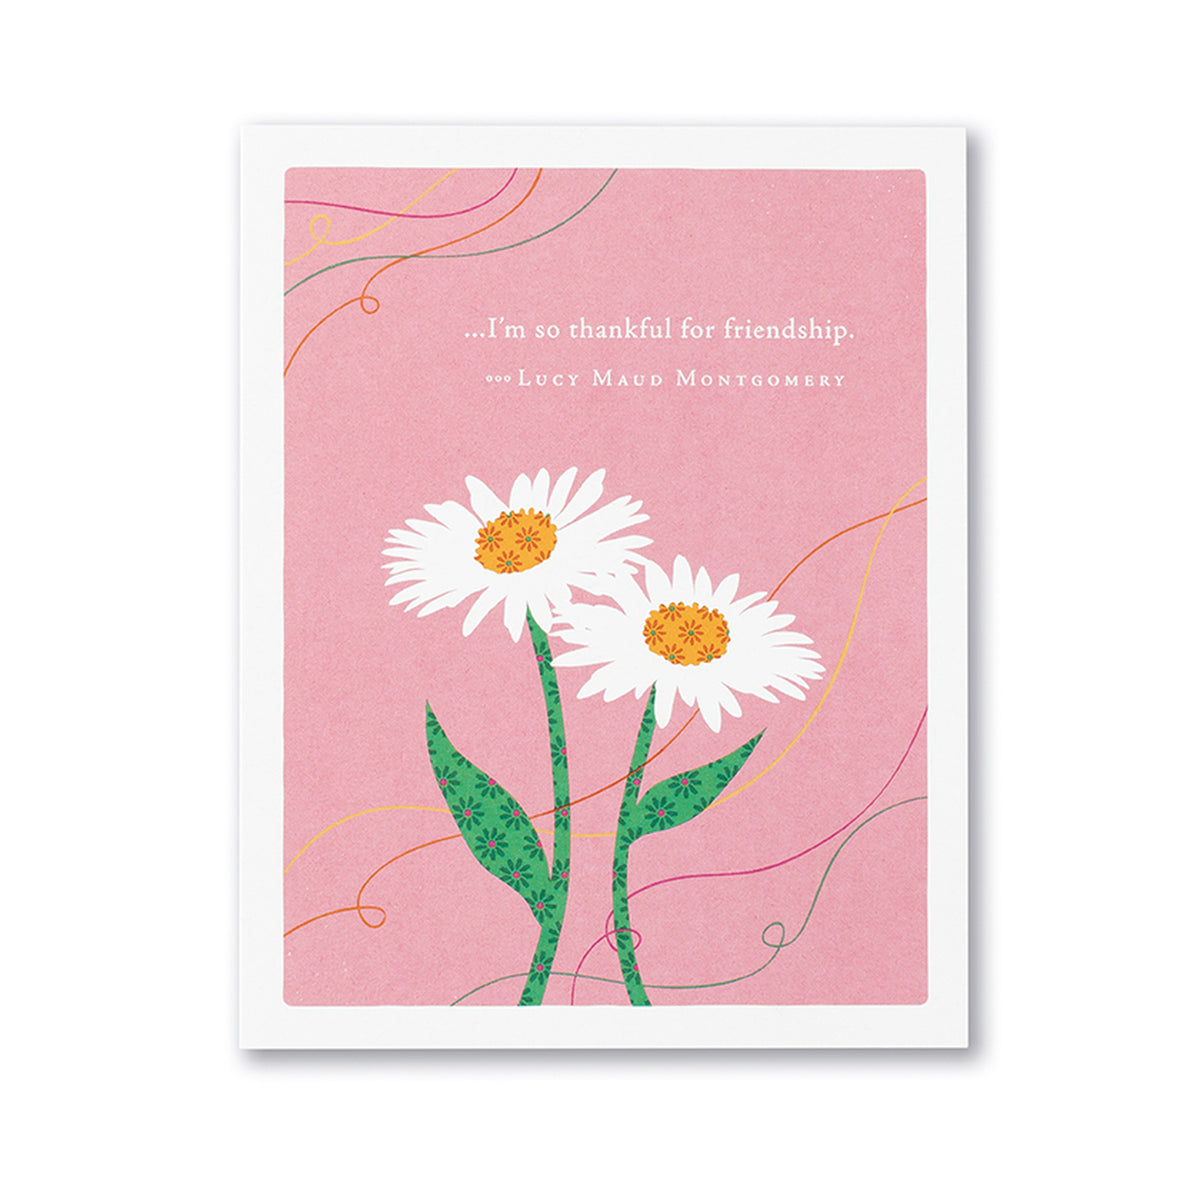 Friendship Card - Lucy Maud Montgomery